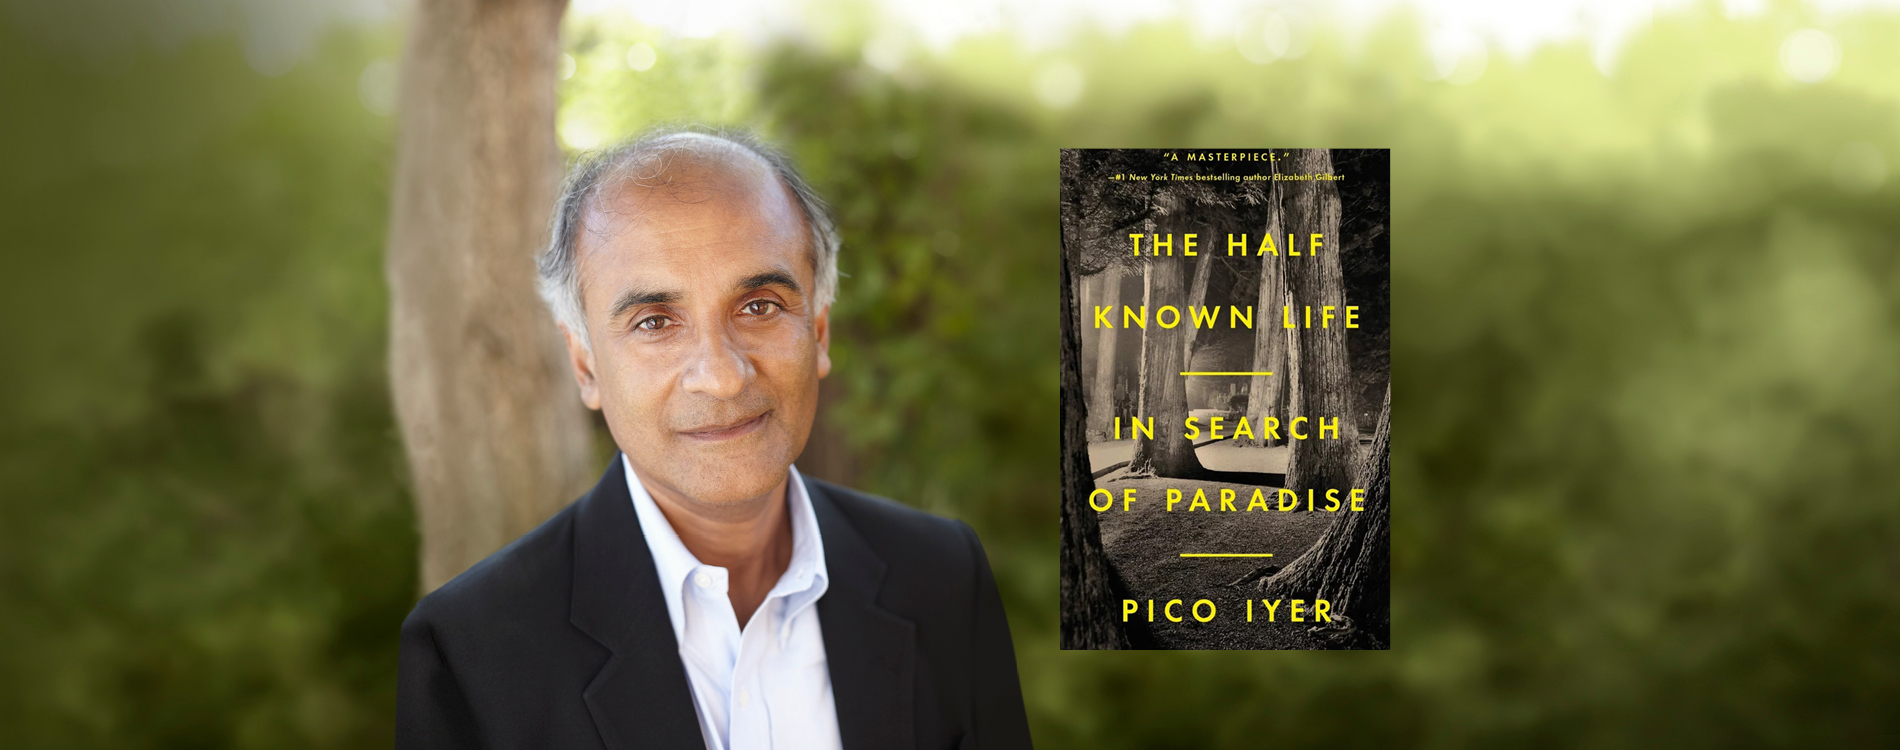 Pico Iyer Author Q&A